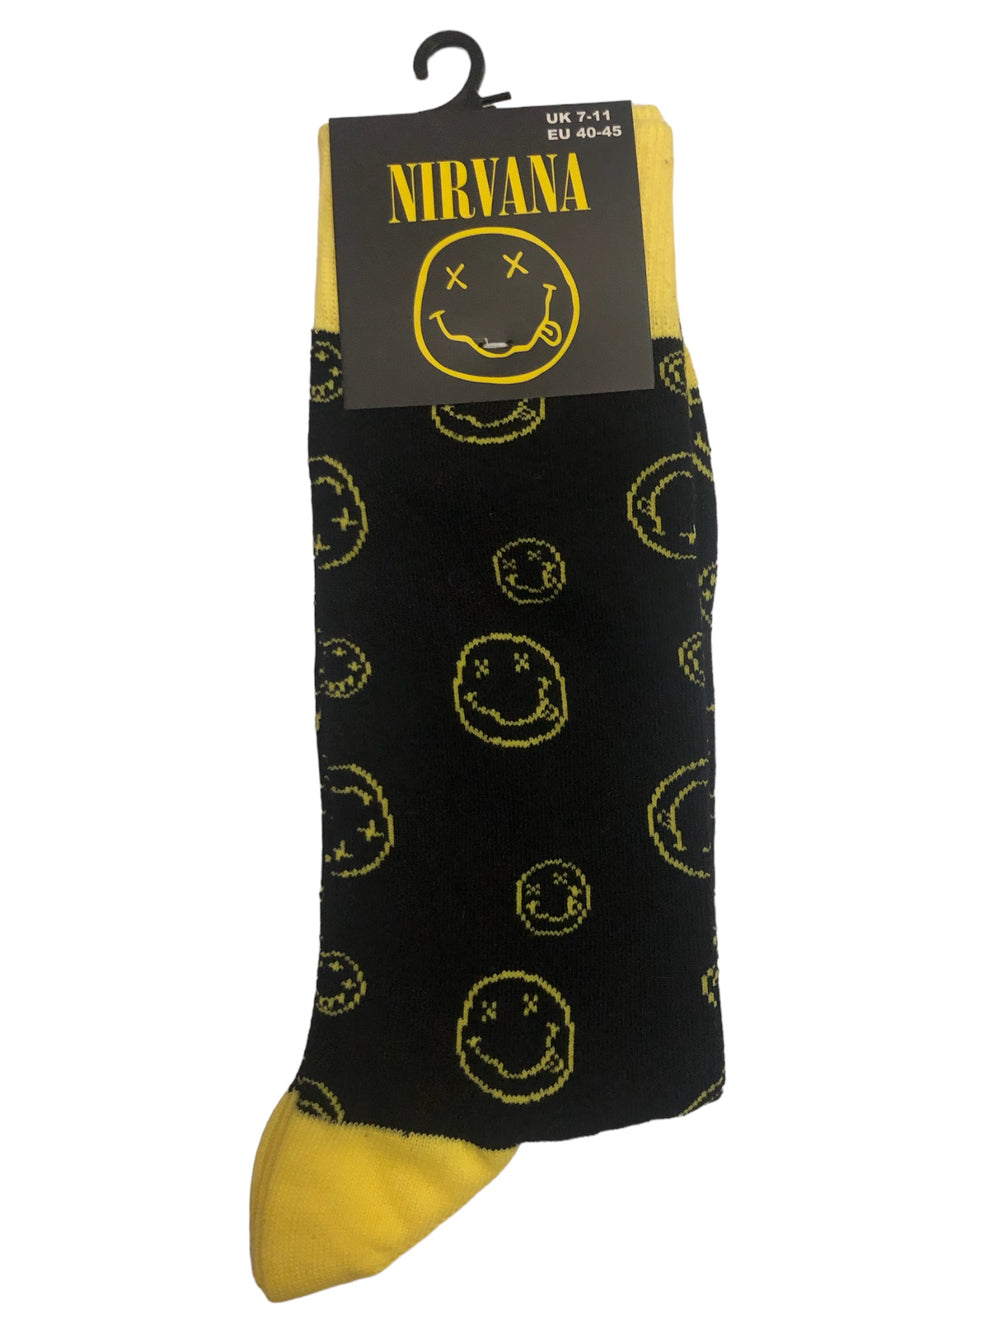 Nirvana Outline Smileys Official Product 1 Pair Jacquard Socks Brand New